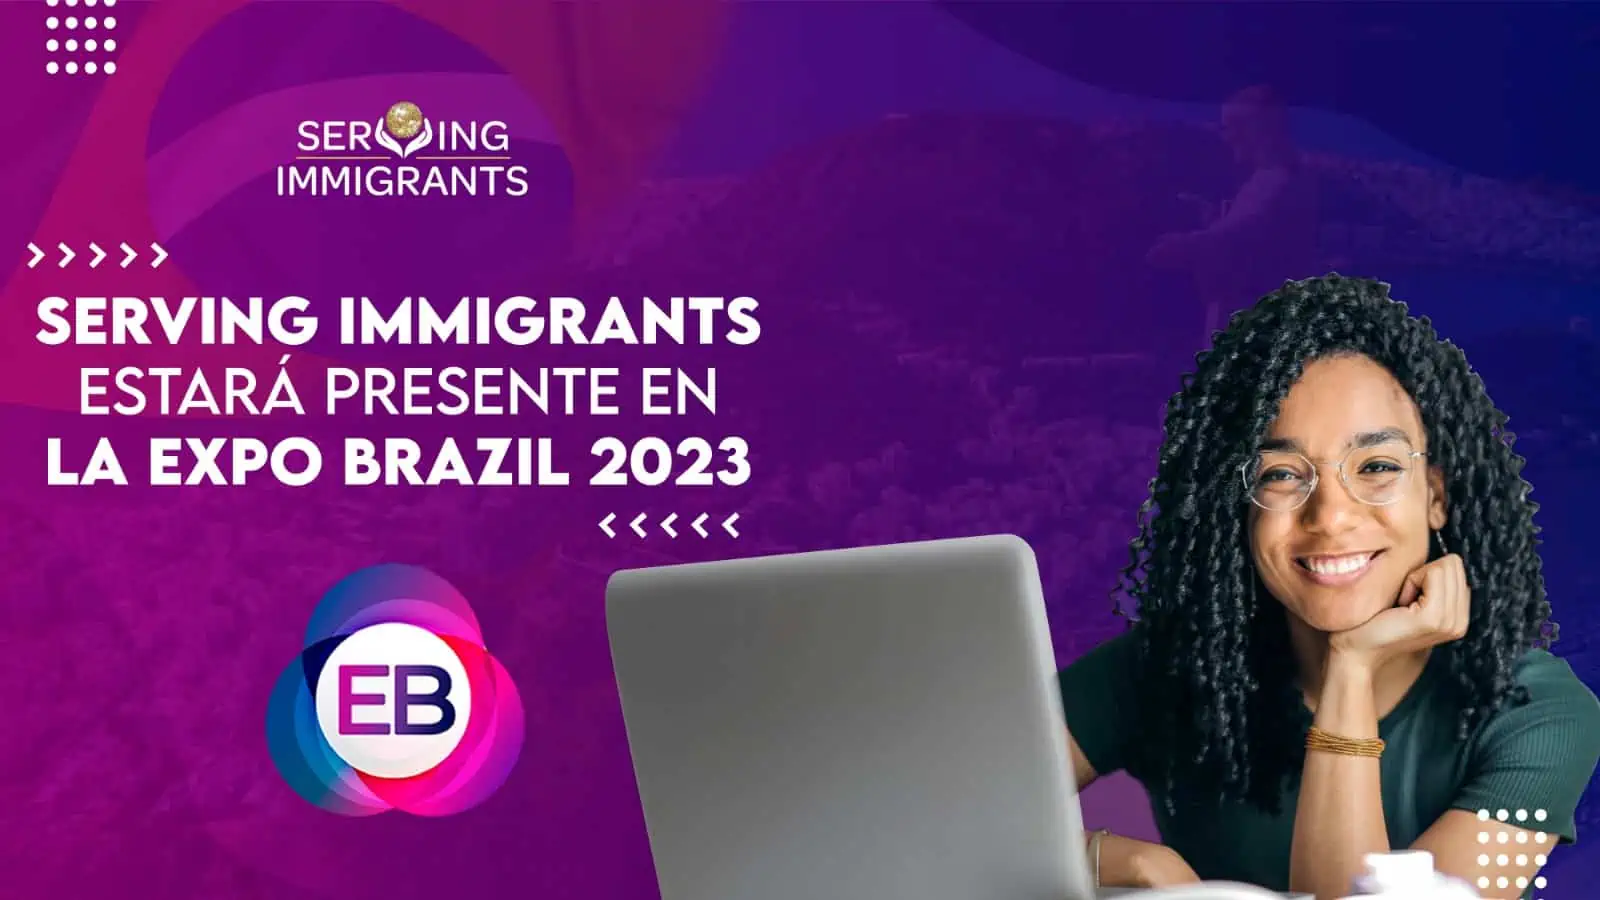 Serving Immigrants estará presente en la Expo Brazil 2023